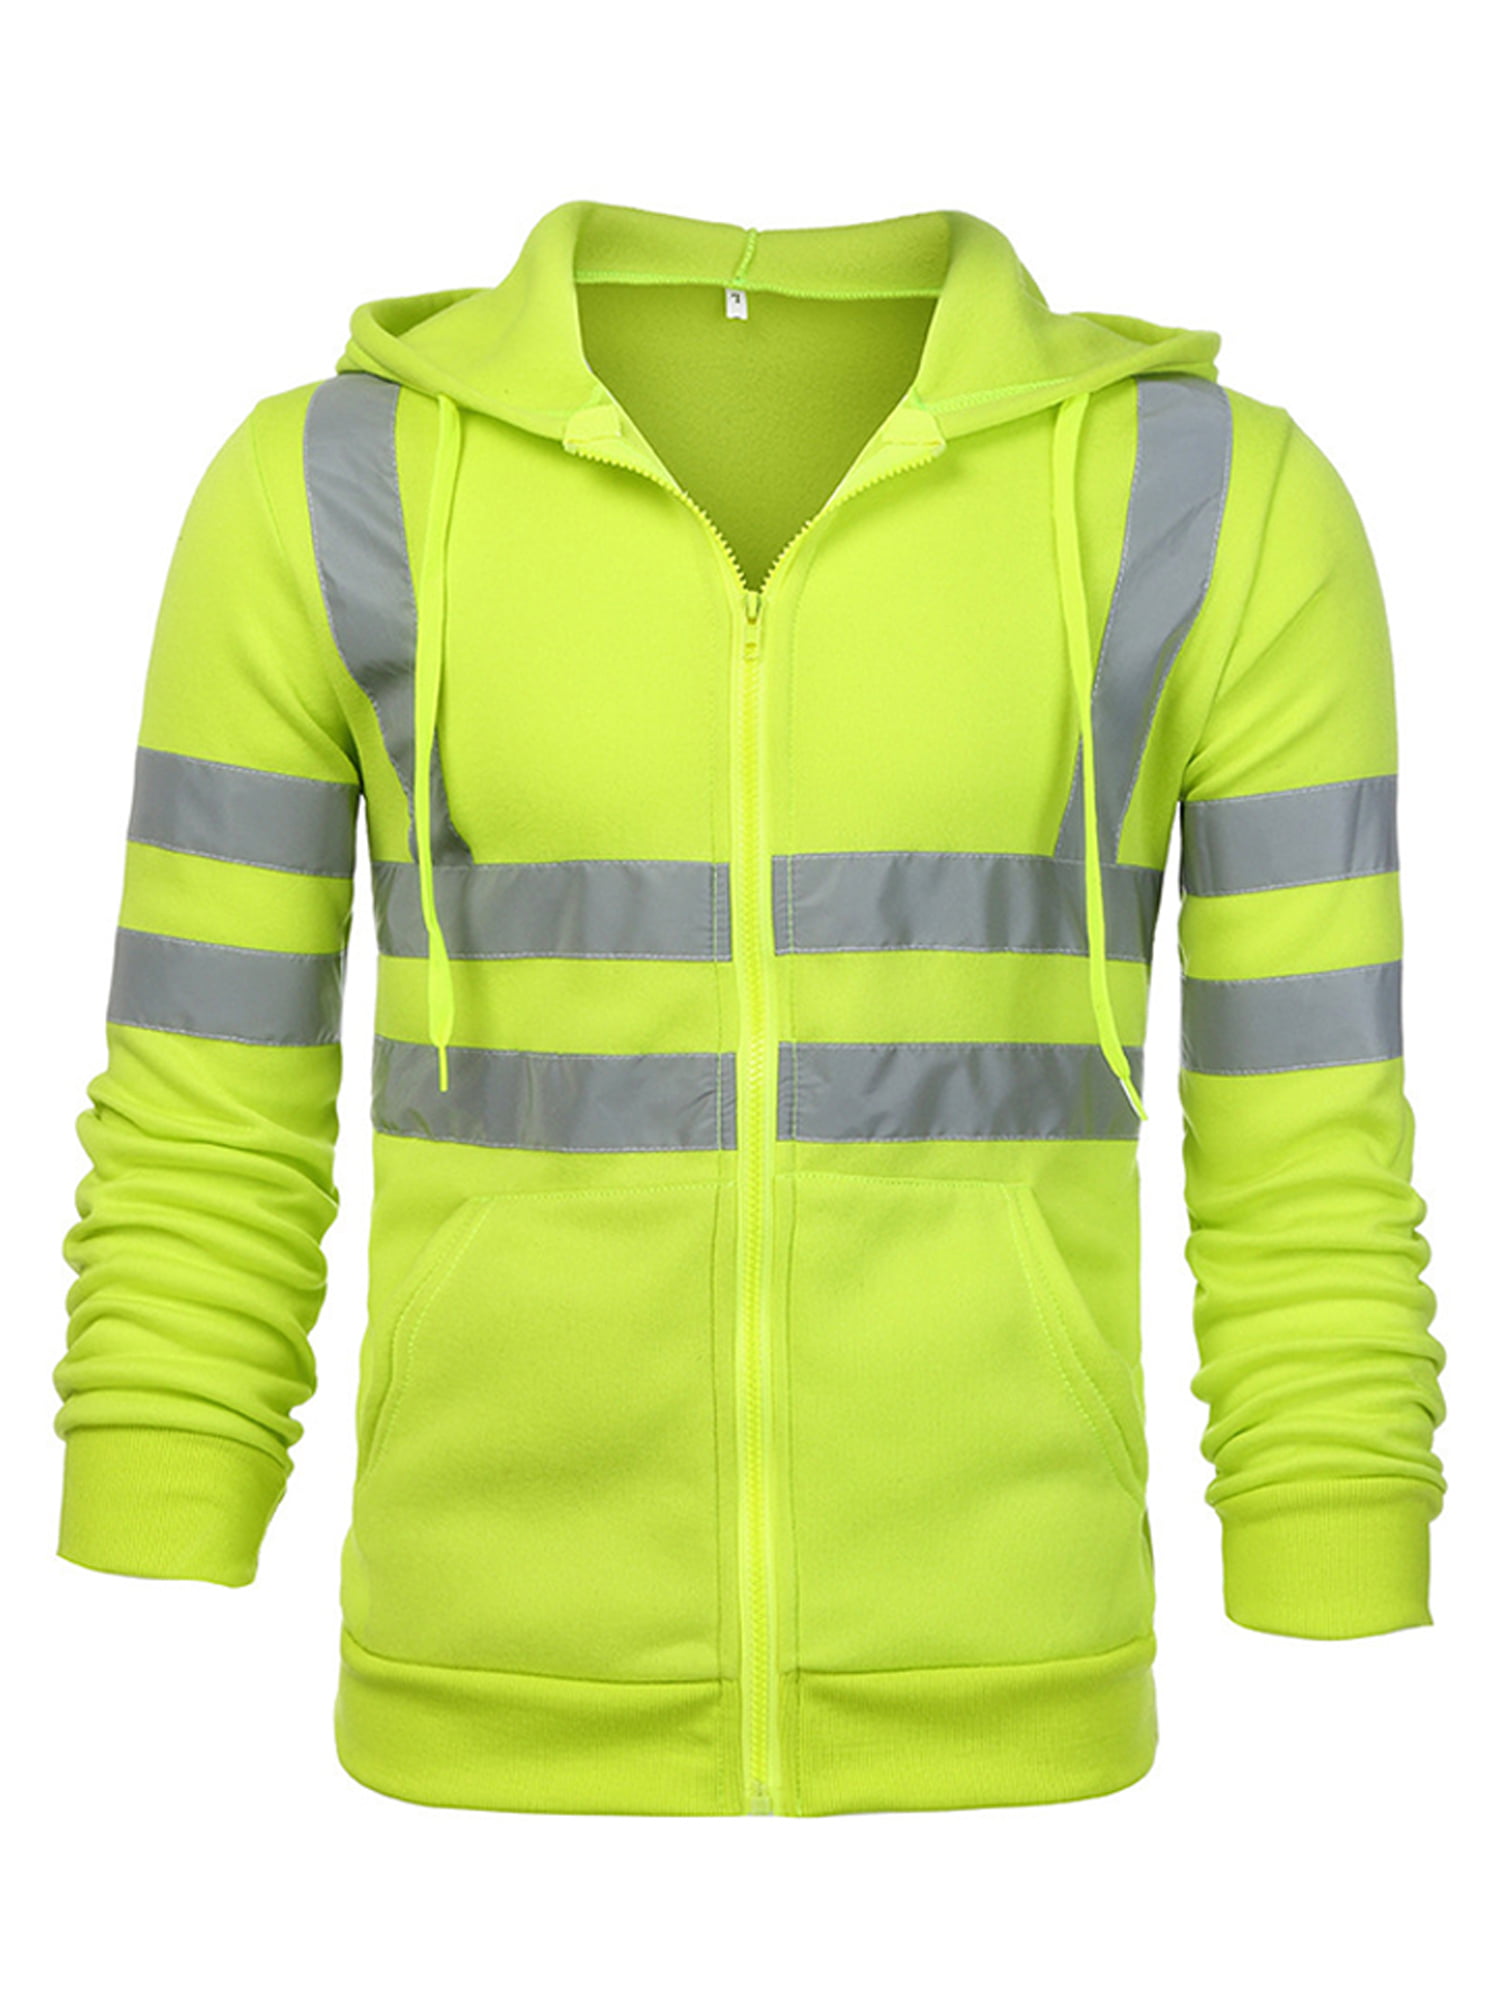 Details about   Hi Vis Men's Safety Work Hoodie Jacket Coat High Visibility Hooded Sweatshirt 